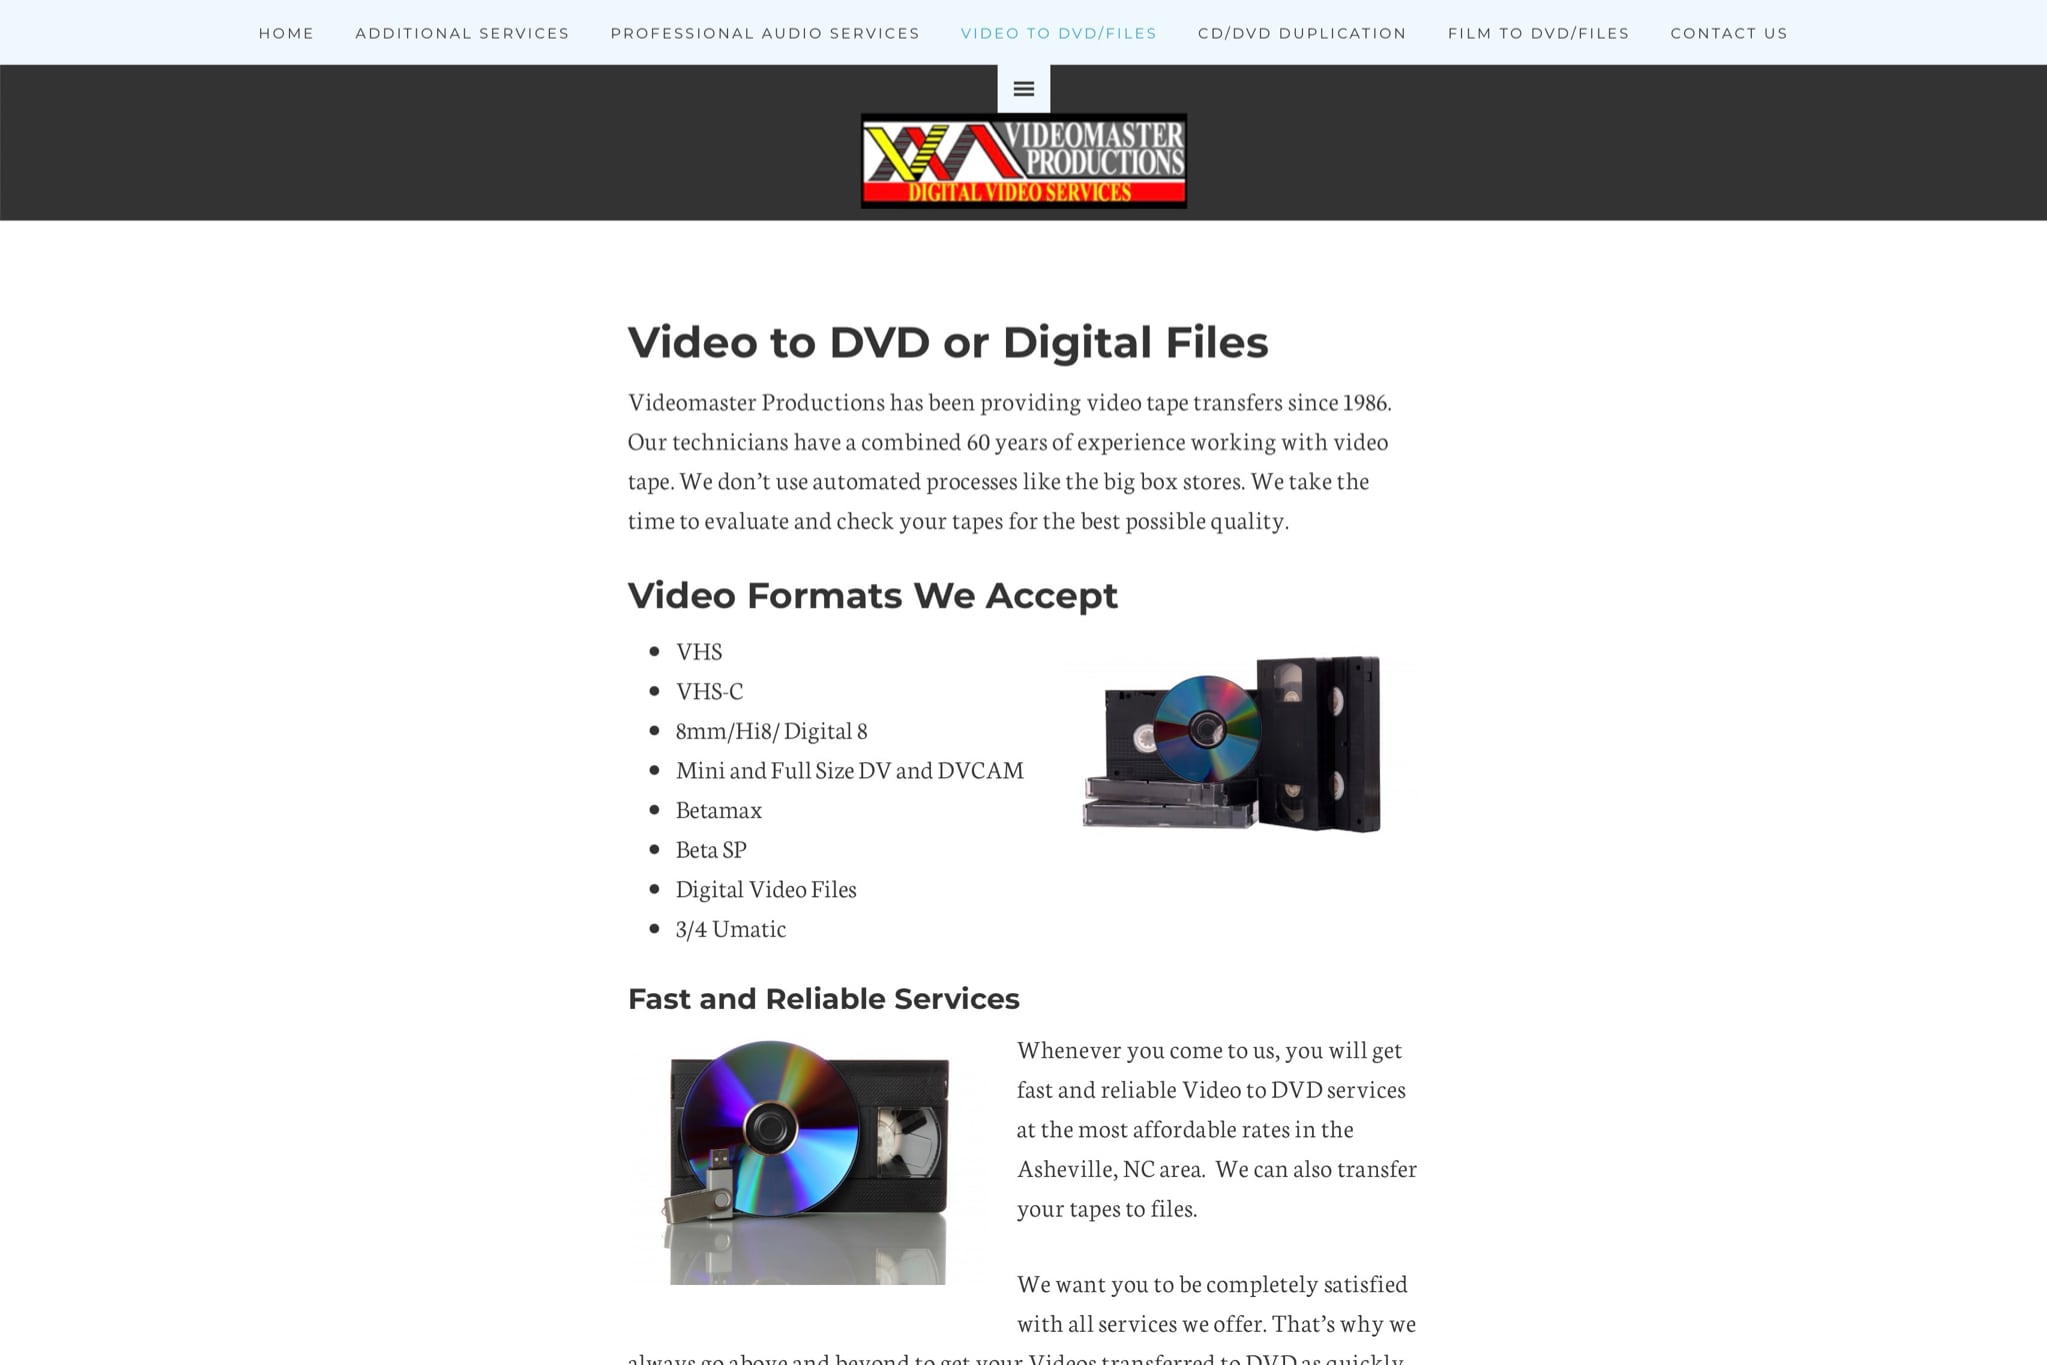 videomasterproductions.com inside page screenshot